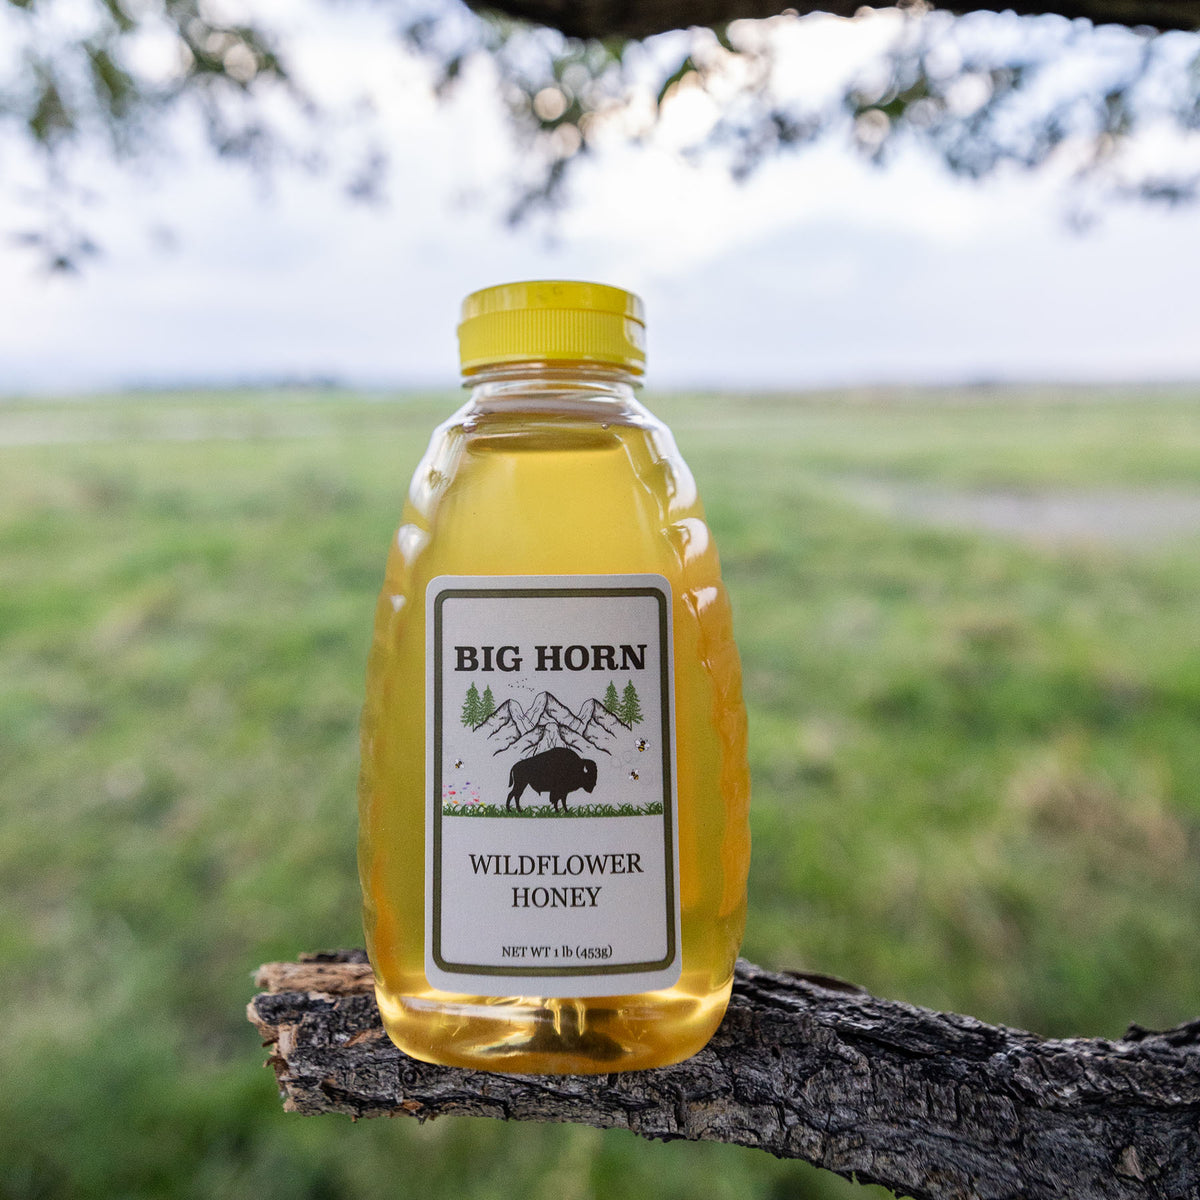 Big Horn Bison Wildflower Pasteurized Honey - 16 oz